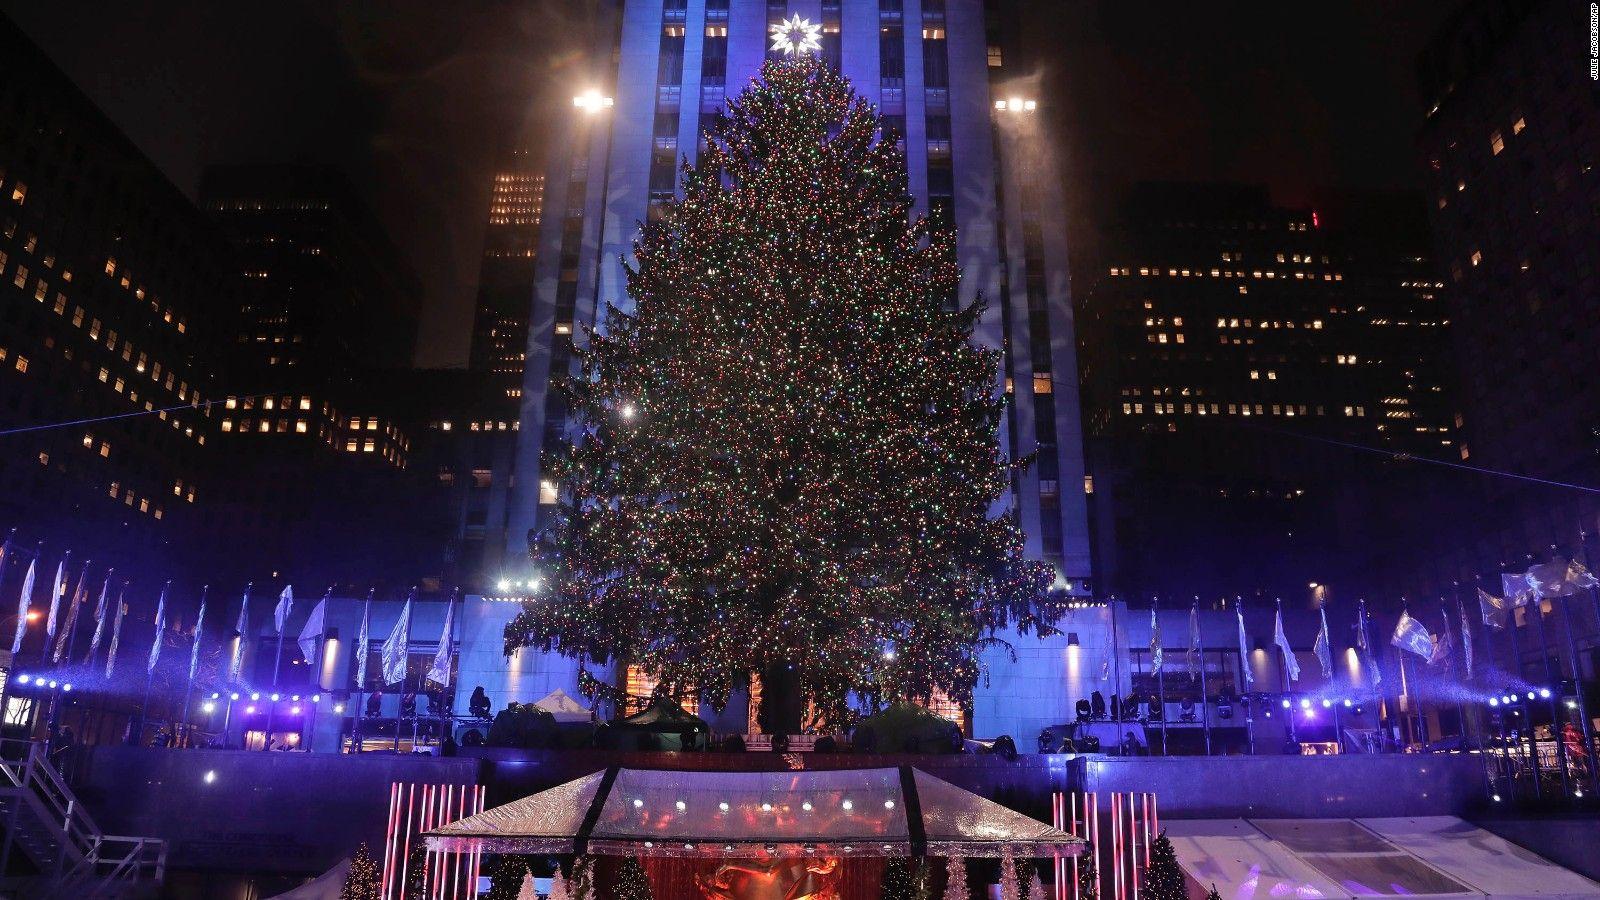 Rockefeller Christmas Tree lights up